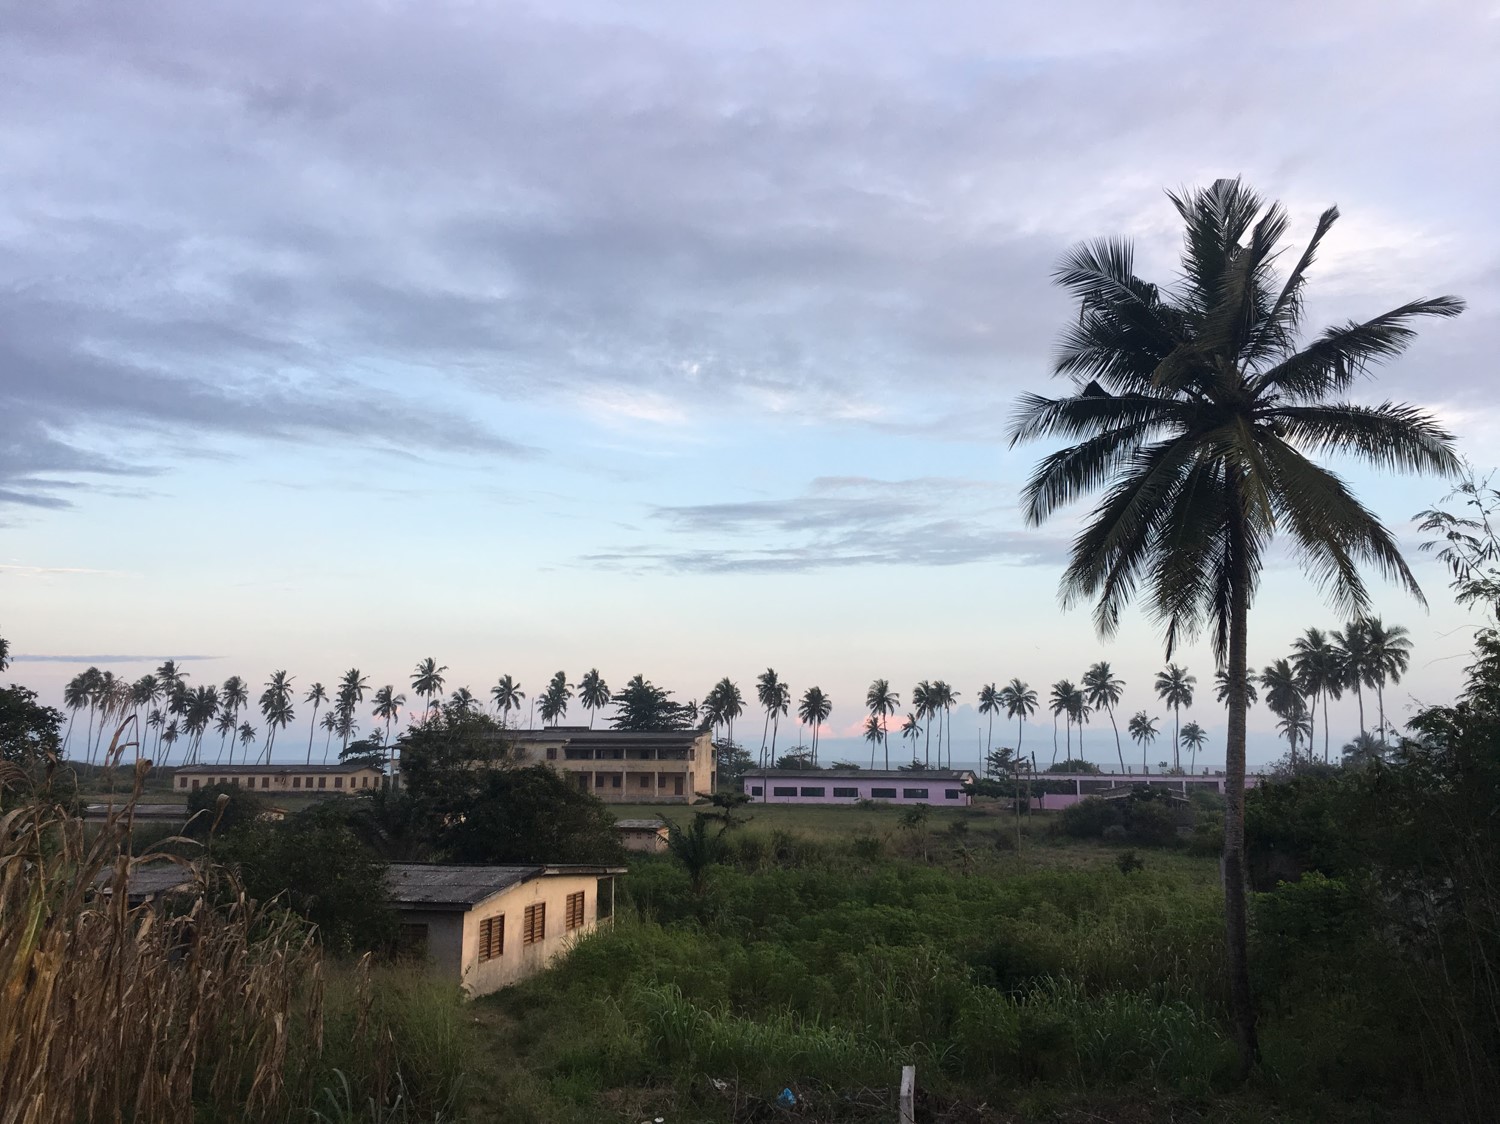 Palm trees in Ghana